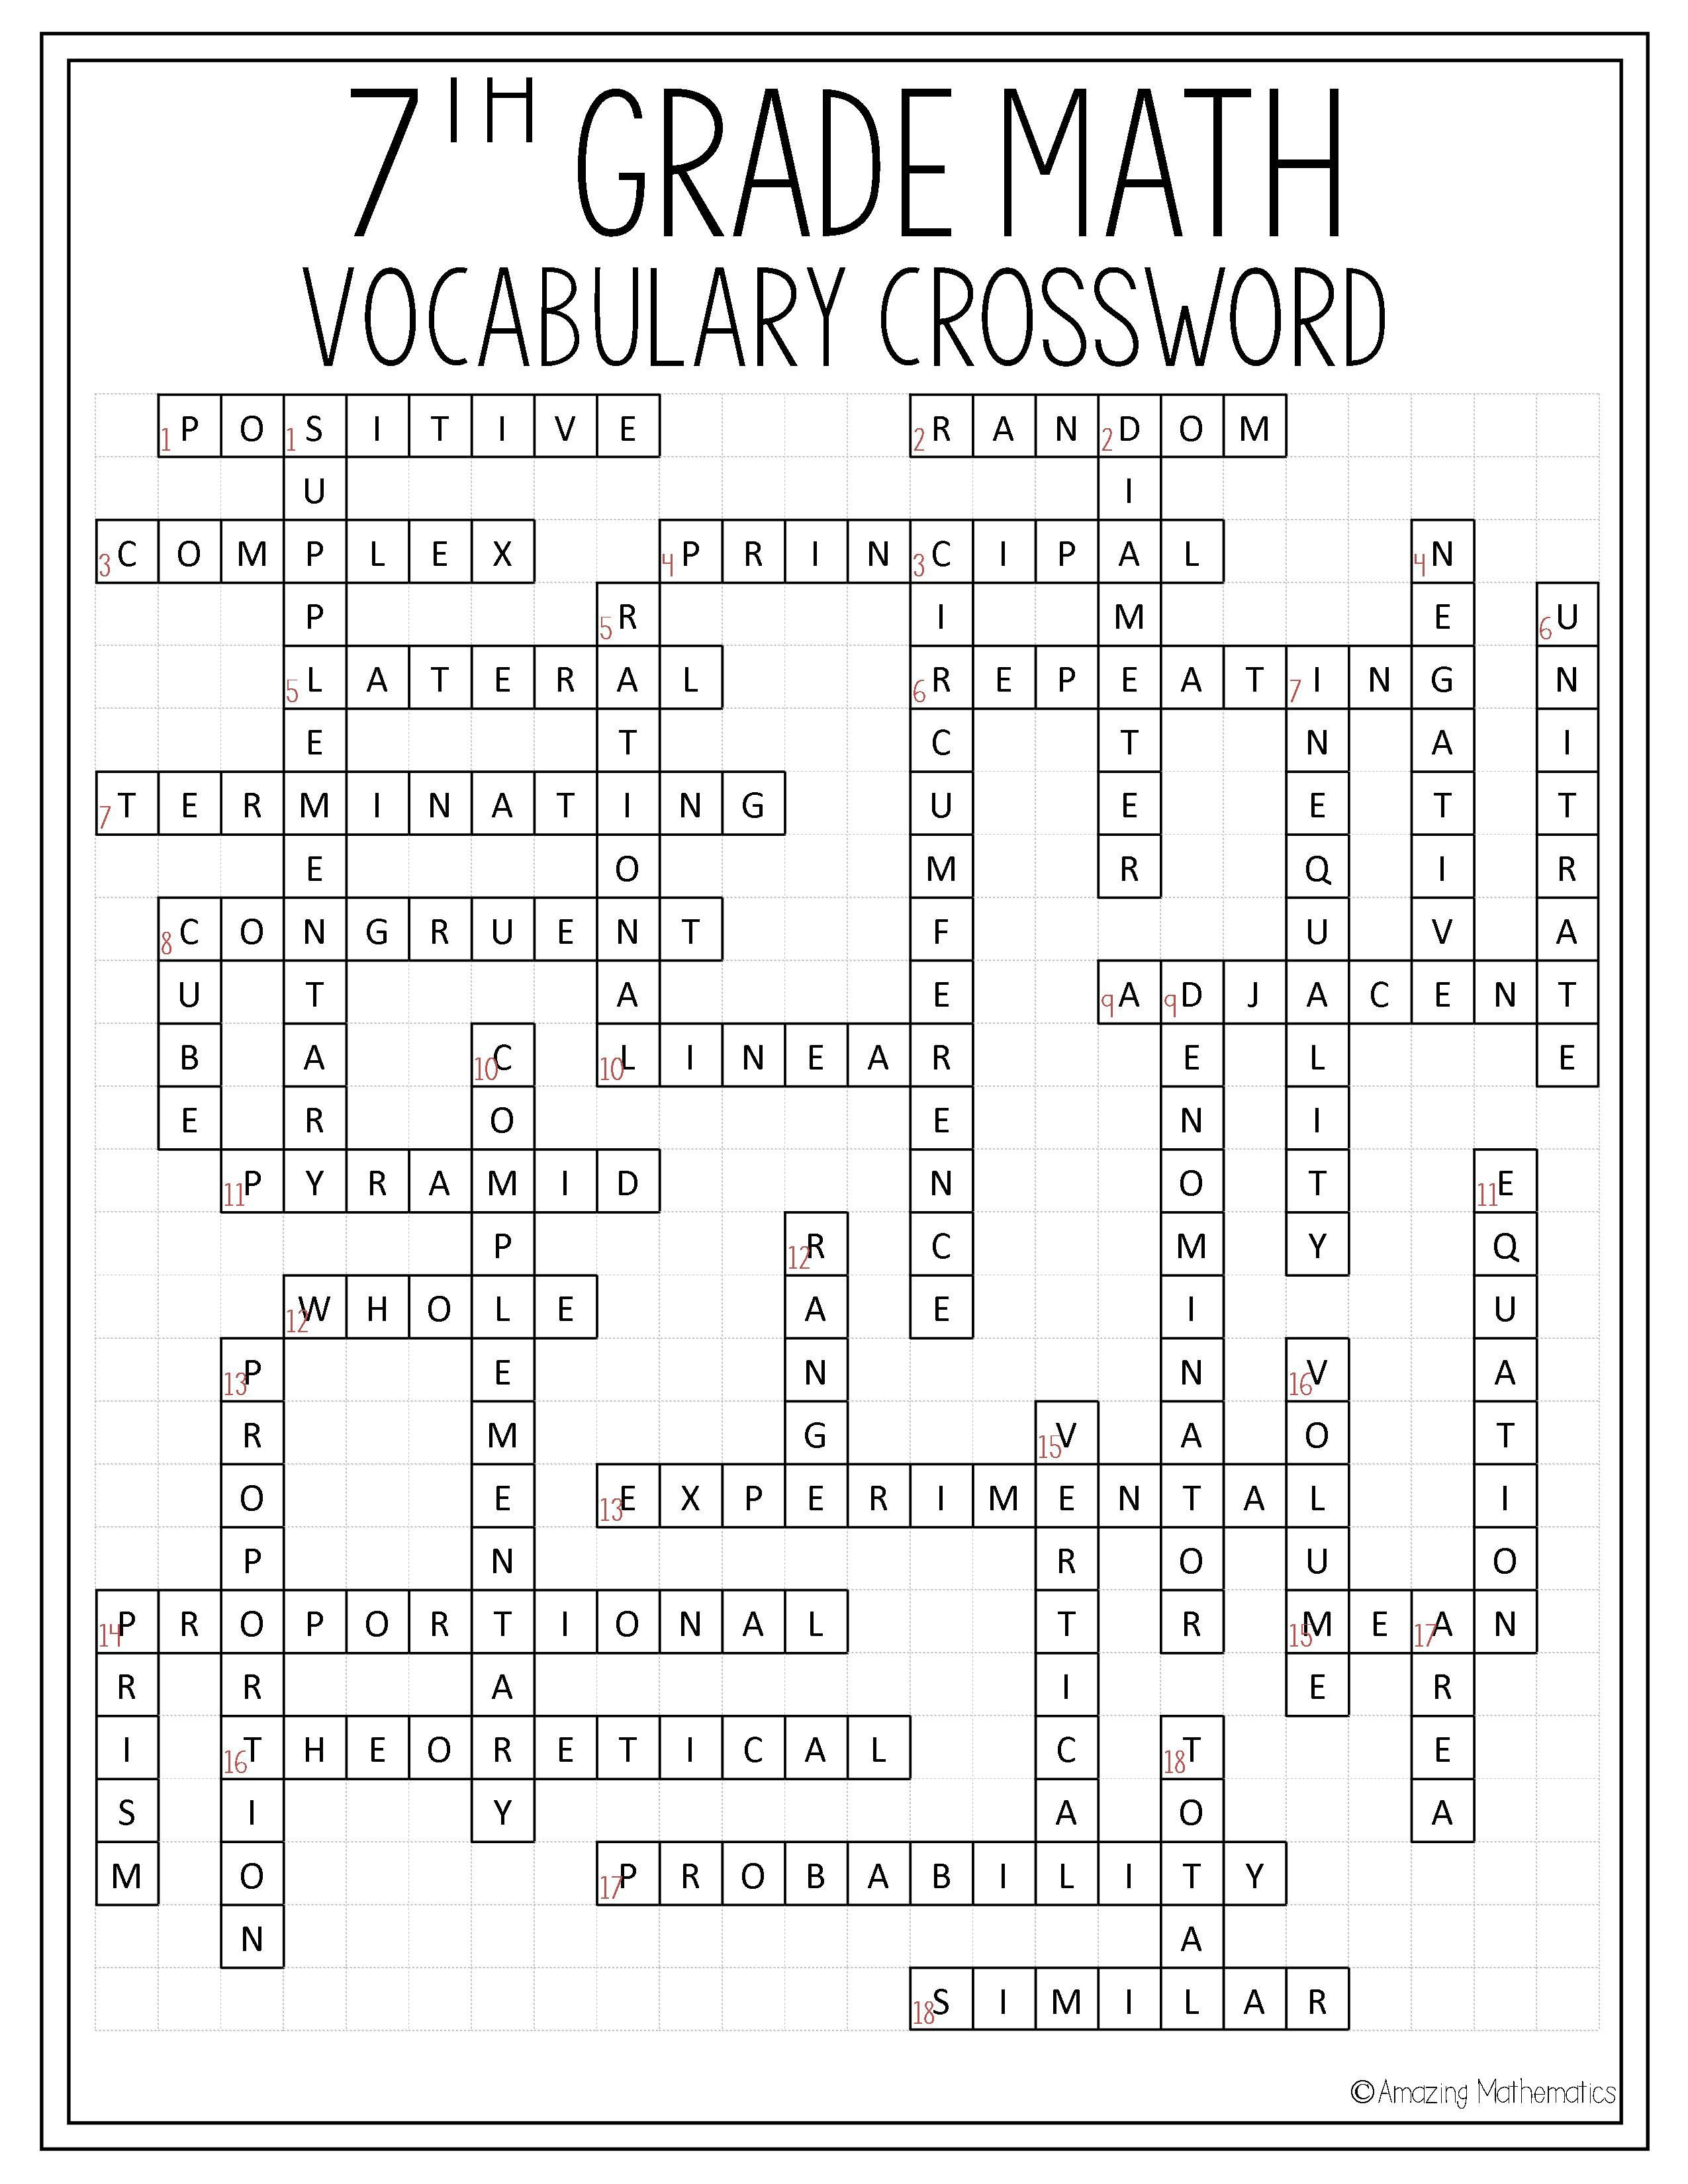 8th Grade Math Vocabulary Crossword 7th Grade Math Vocabulary Crossword